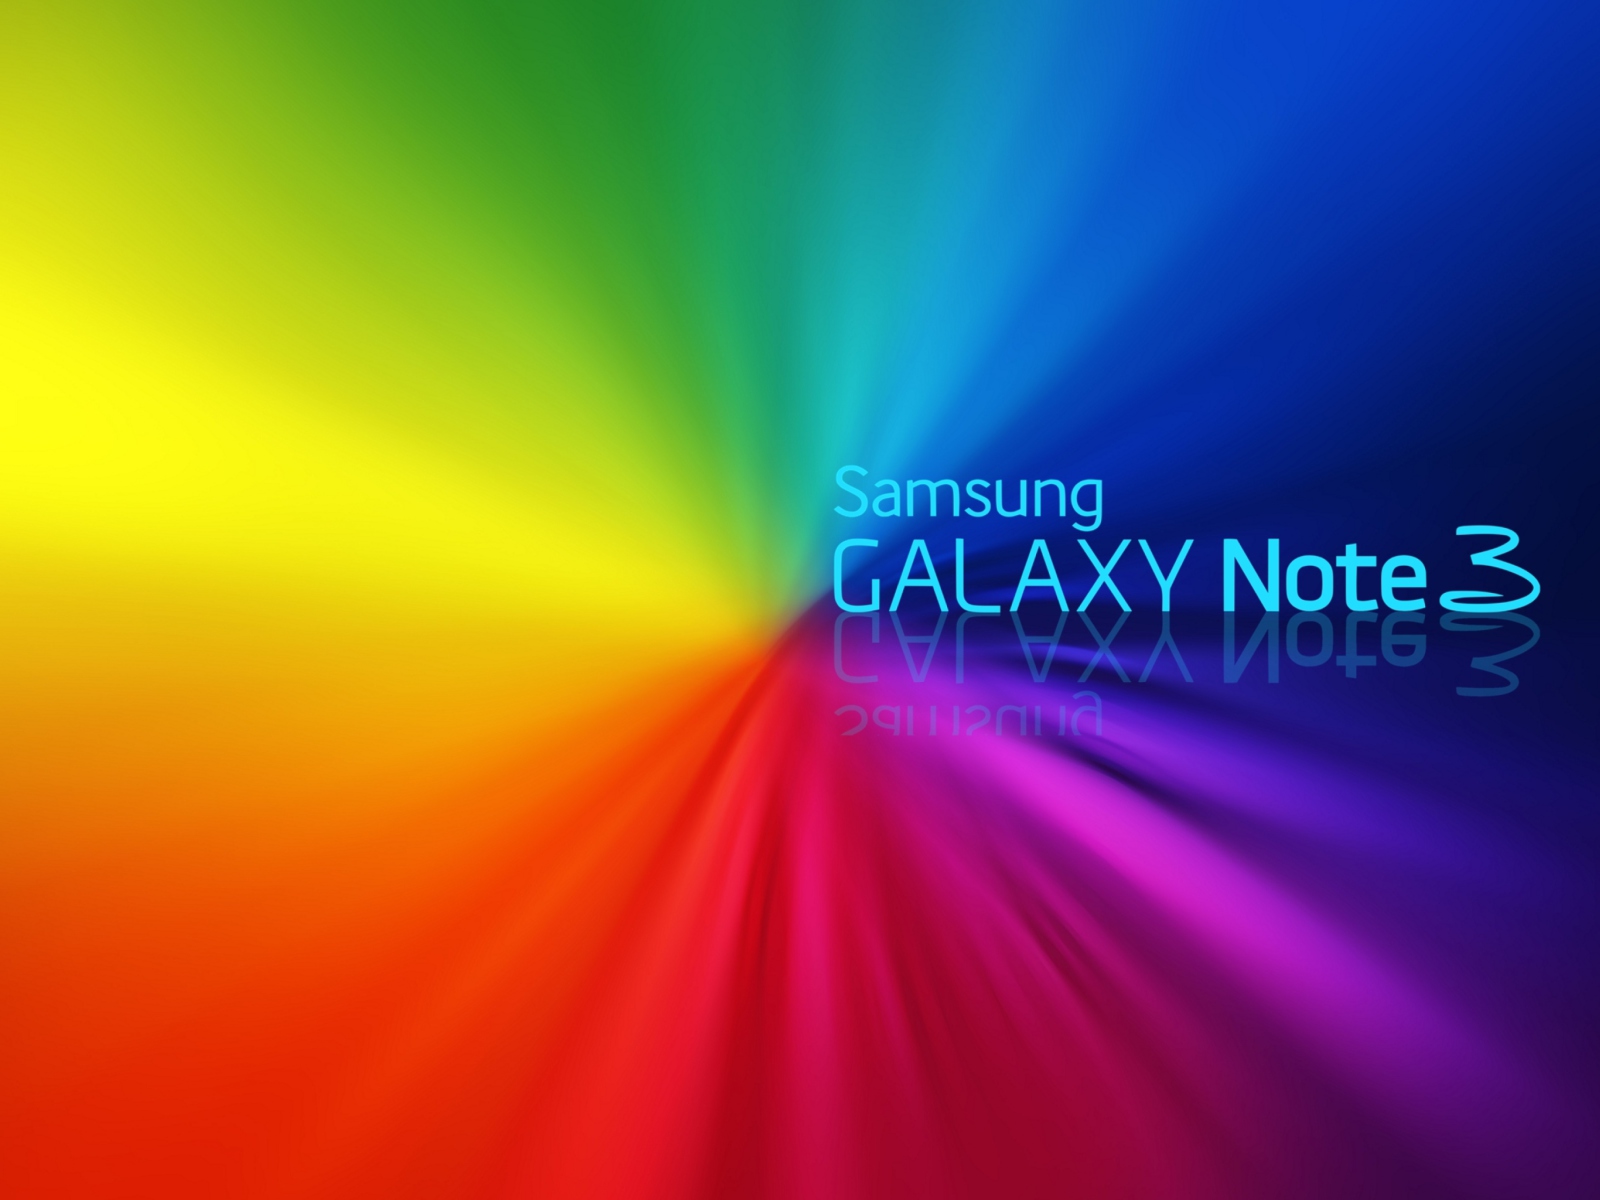 Samsung Galaxy Note 3 wallpaper 1600x1200